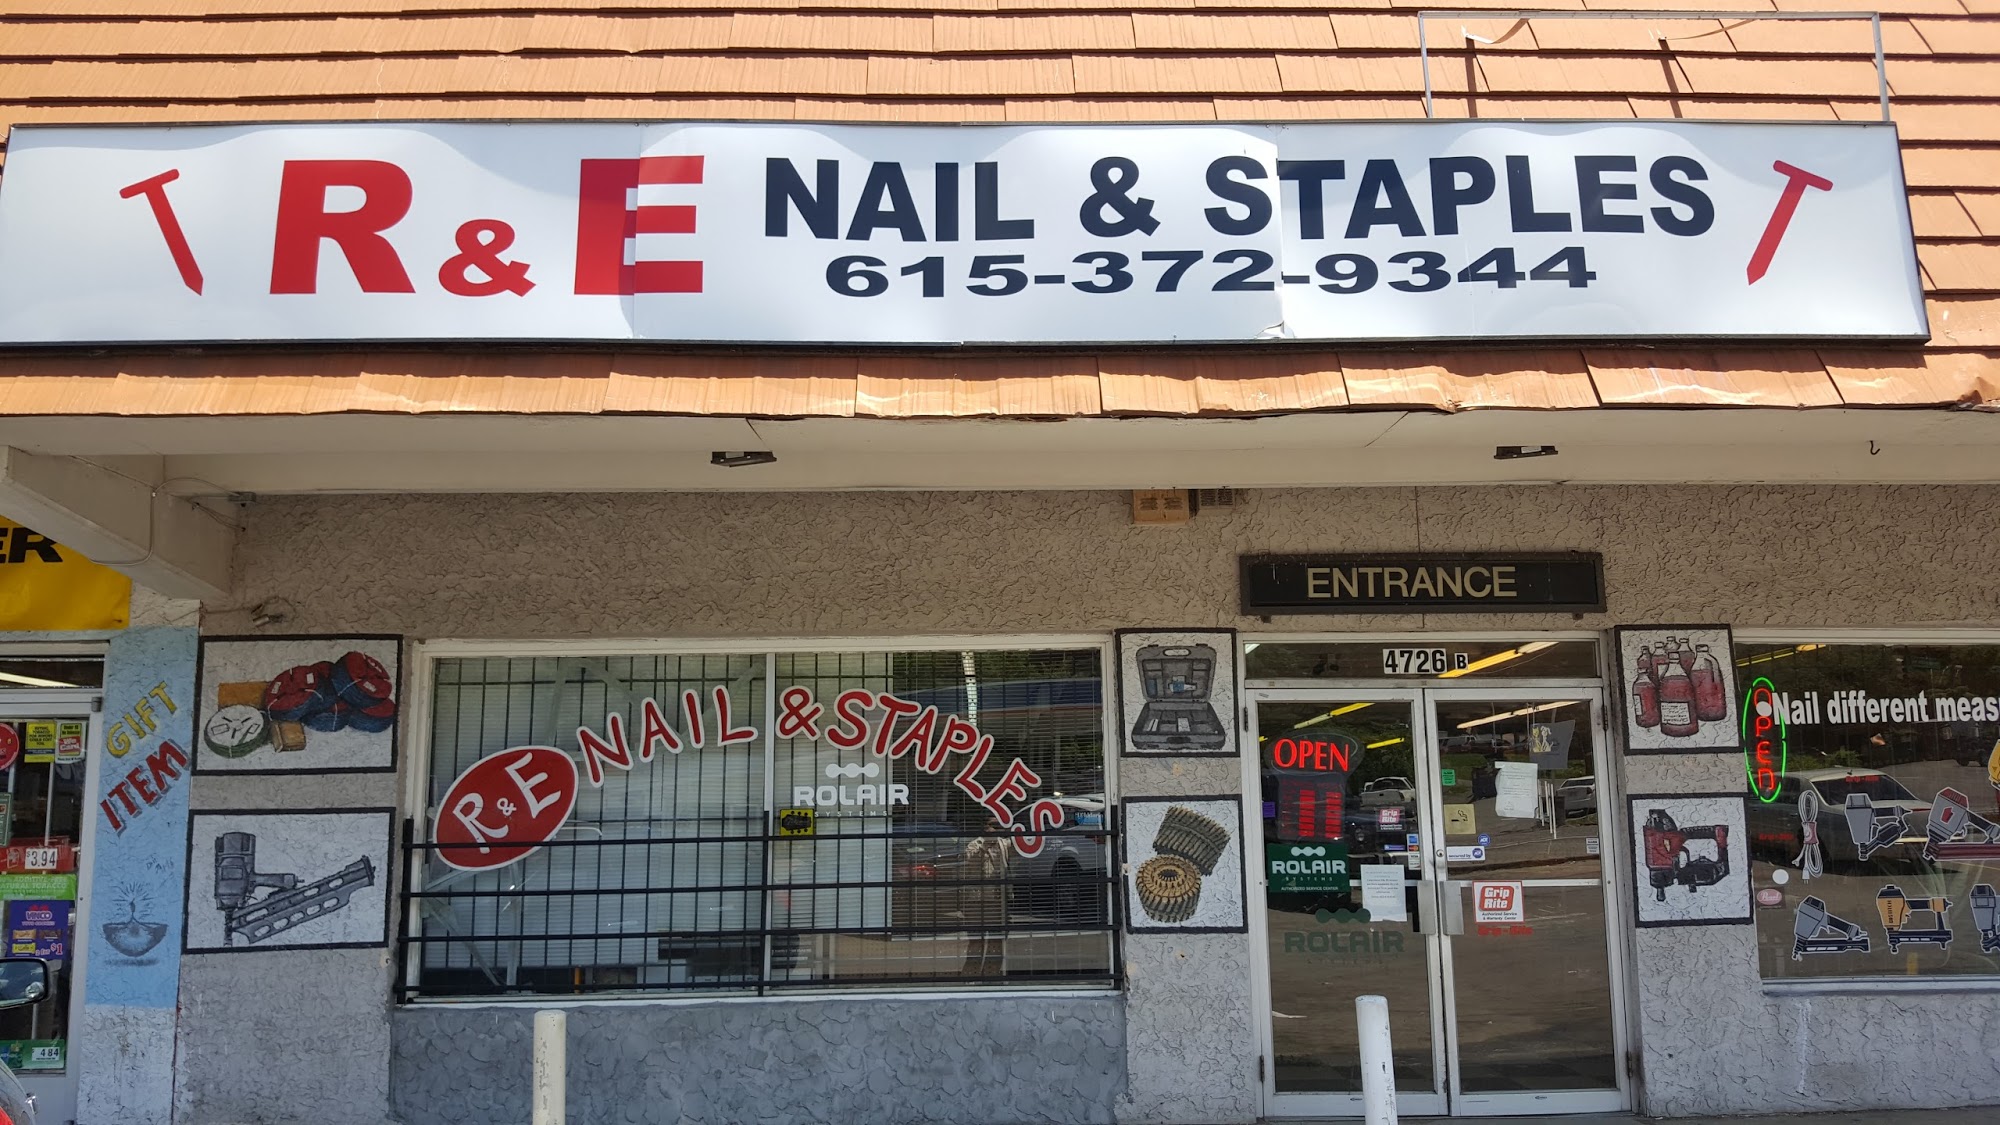 R & E Nail & Staples